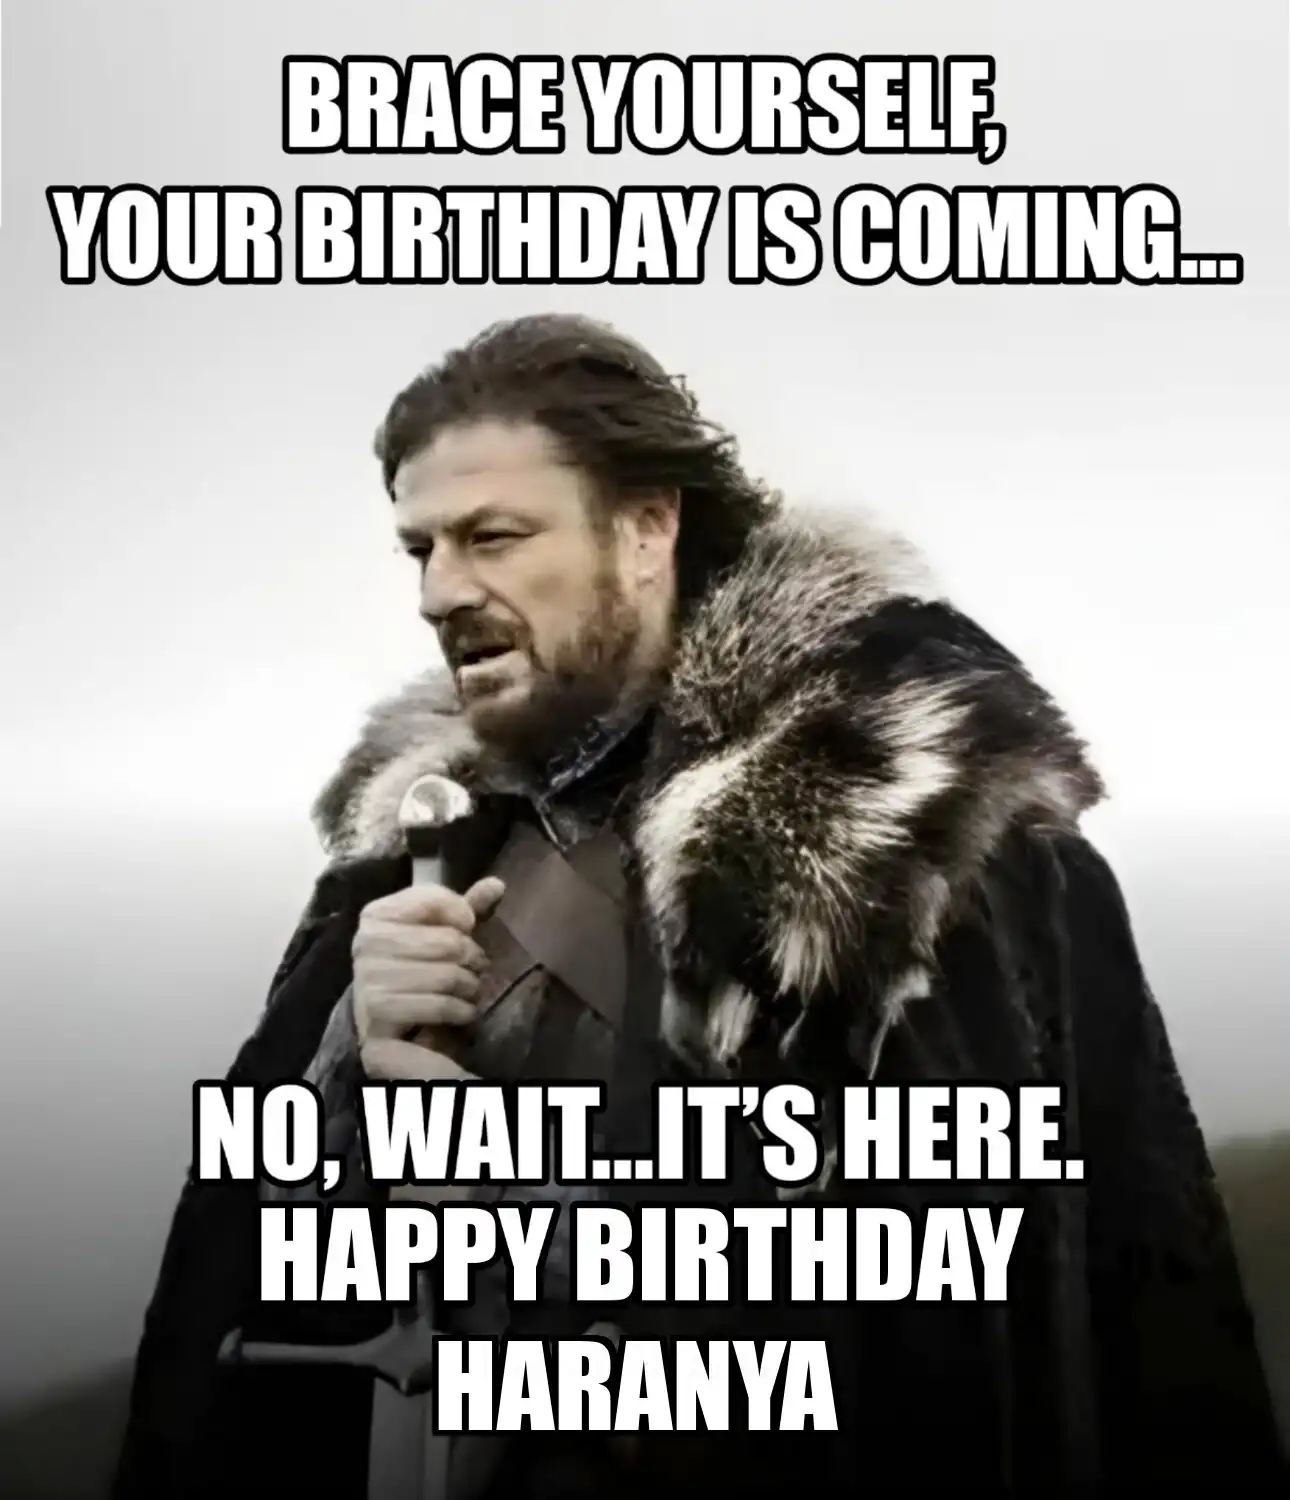 Happy Birthday Haranya Brace Yourself Your Birthday Is Coming Meme